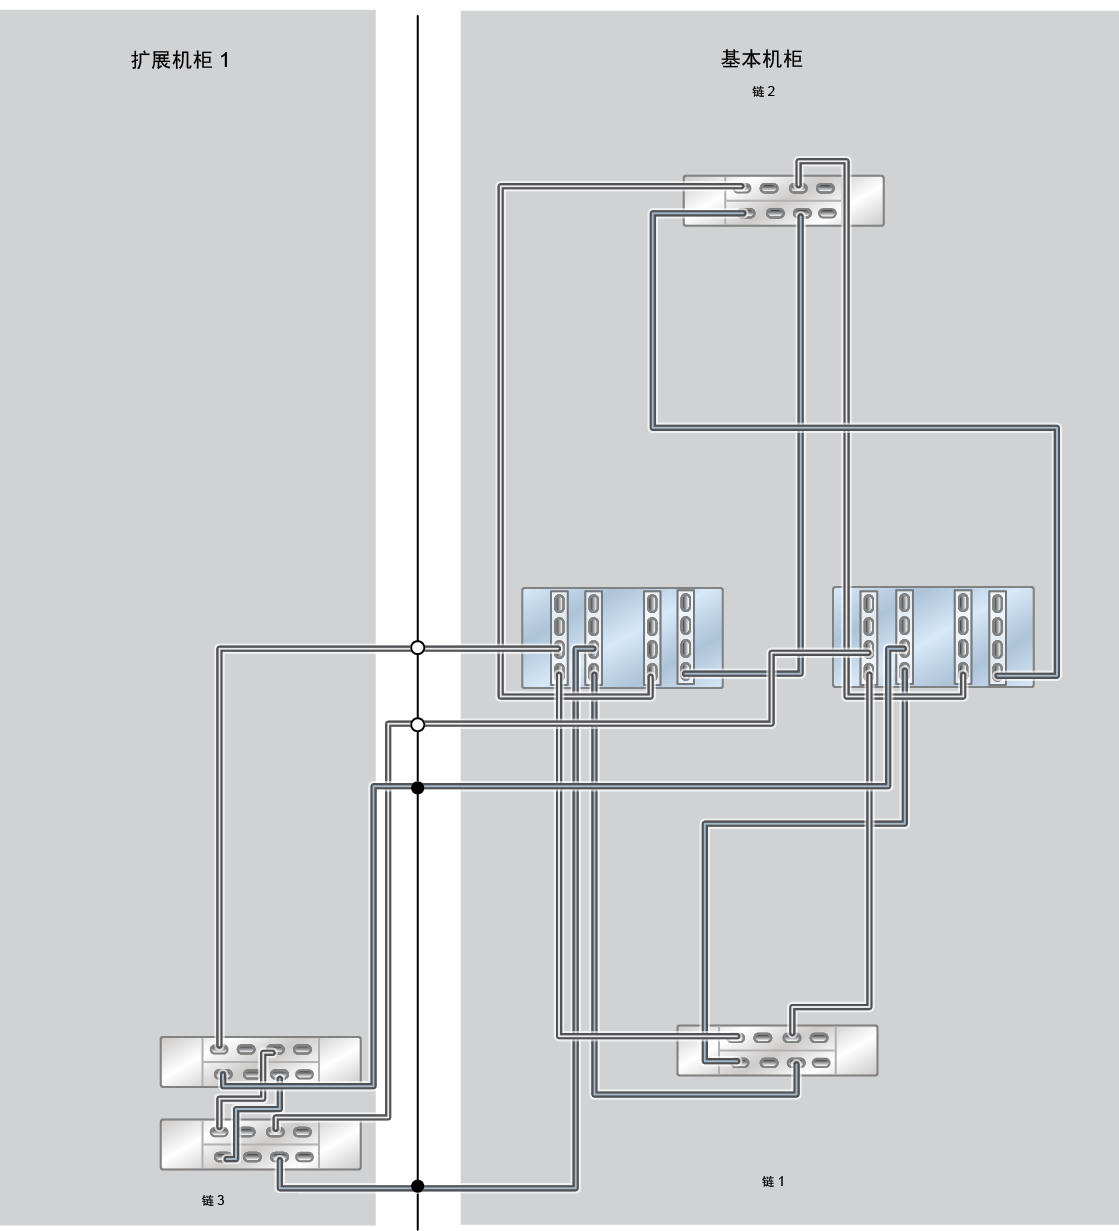 image:此图显示了具有一个扩展机柜（两个 DE3-24C 磁盘机框）的 ZS7-2 HE Racked System 全闪存。